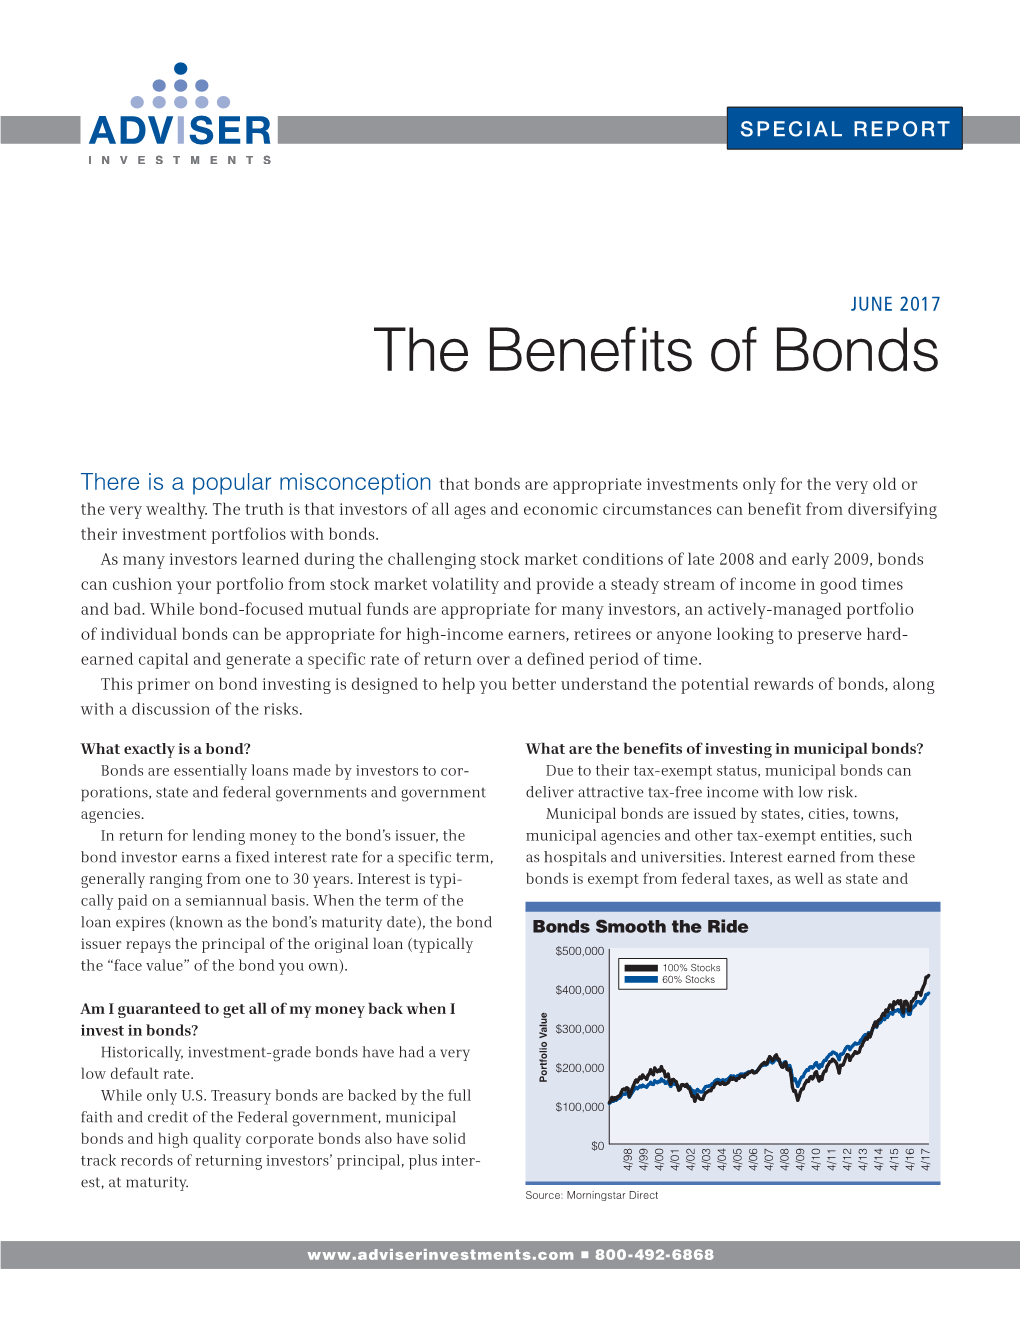 The Benefits of Bonds